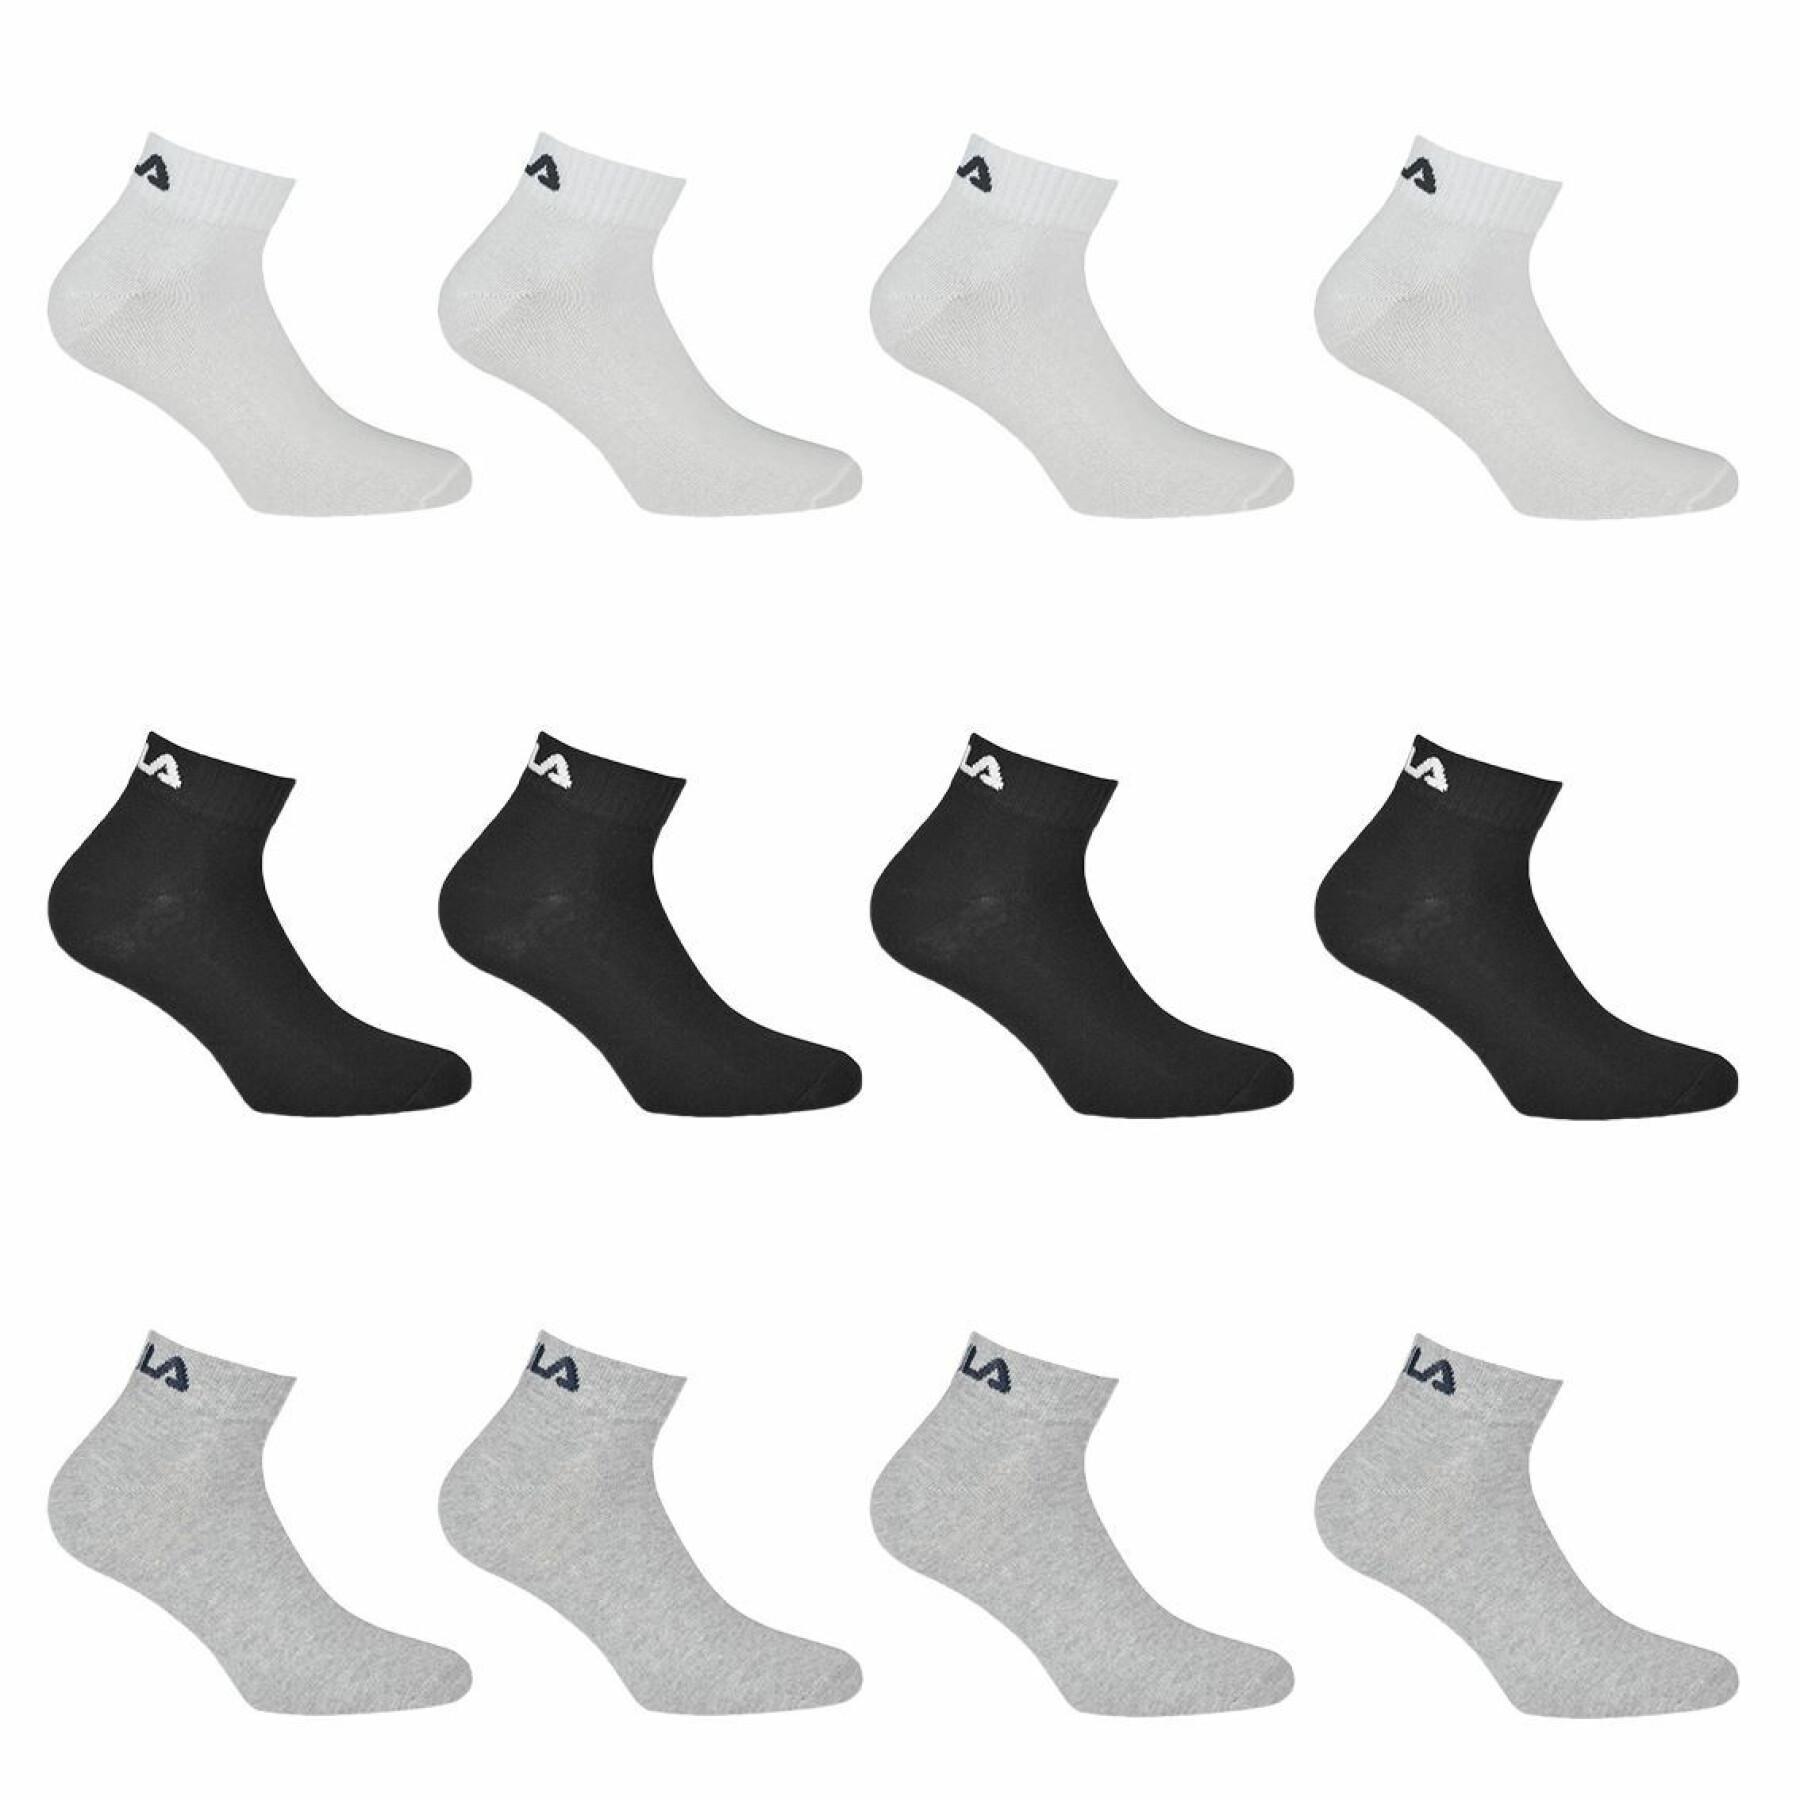 Lot of 12 pairs of quarter socks model 9300 Fila